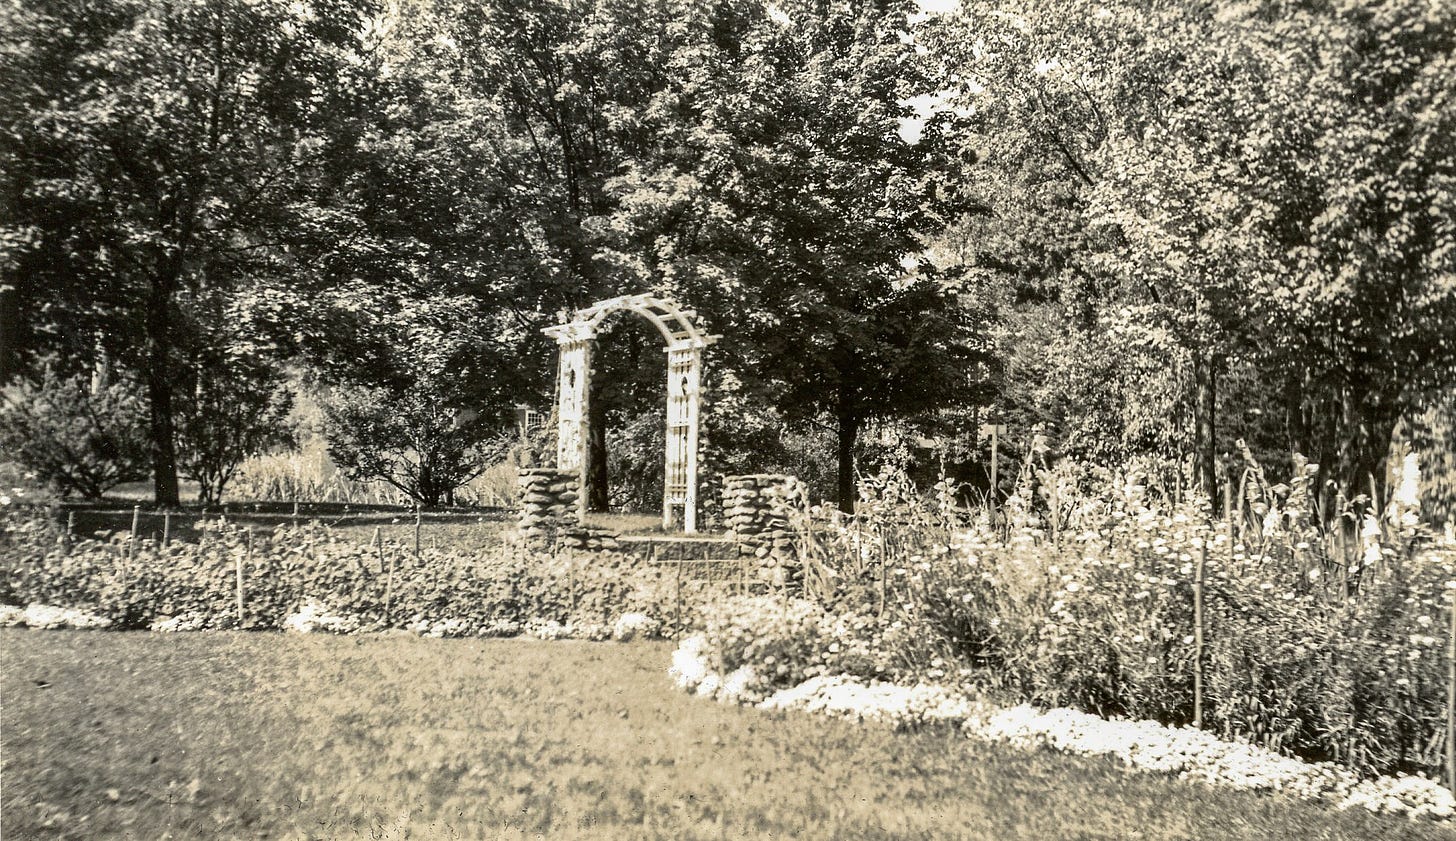 Gate and stonework